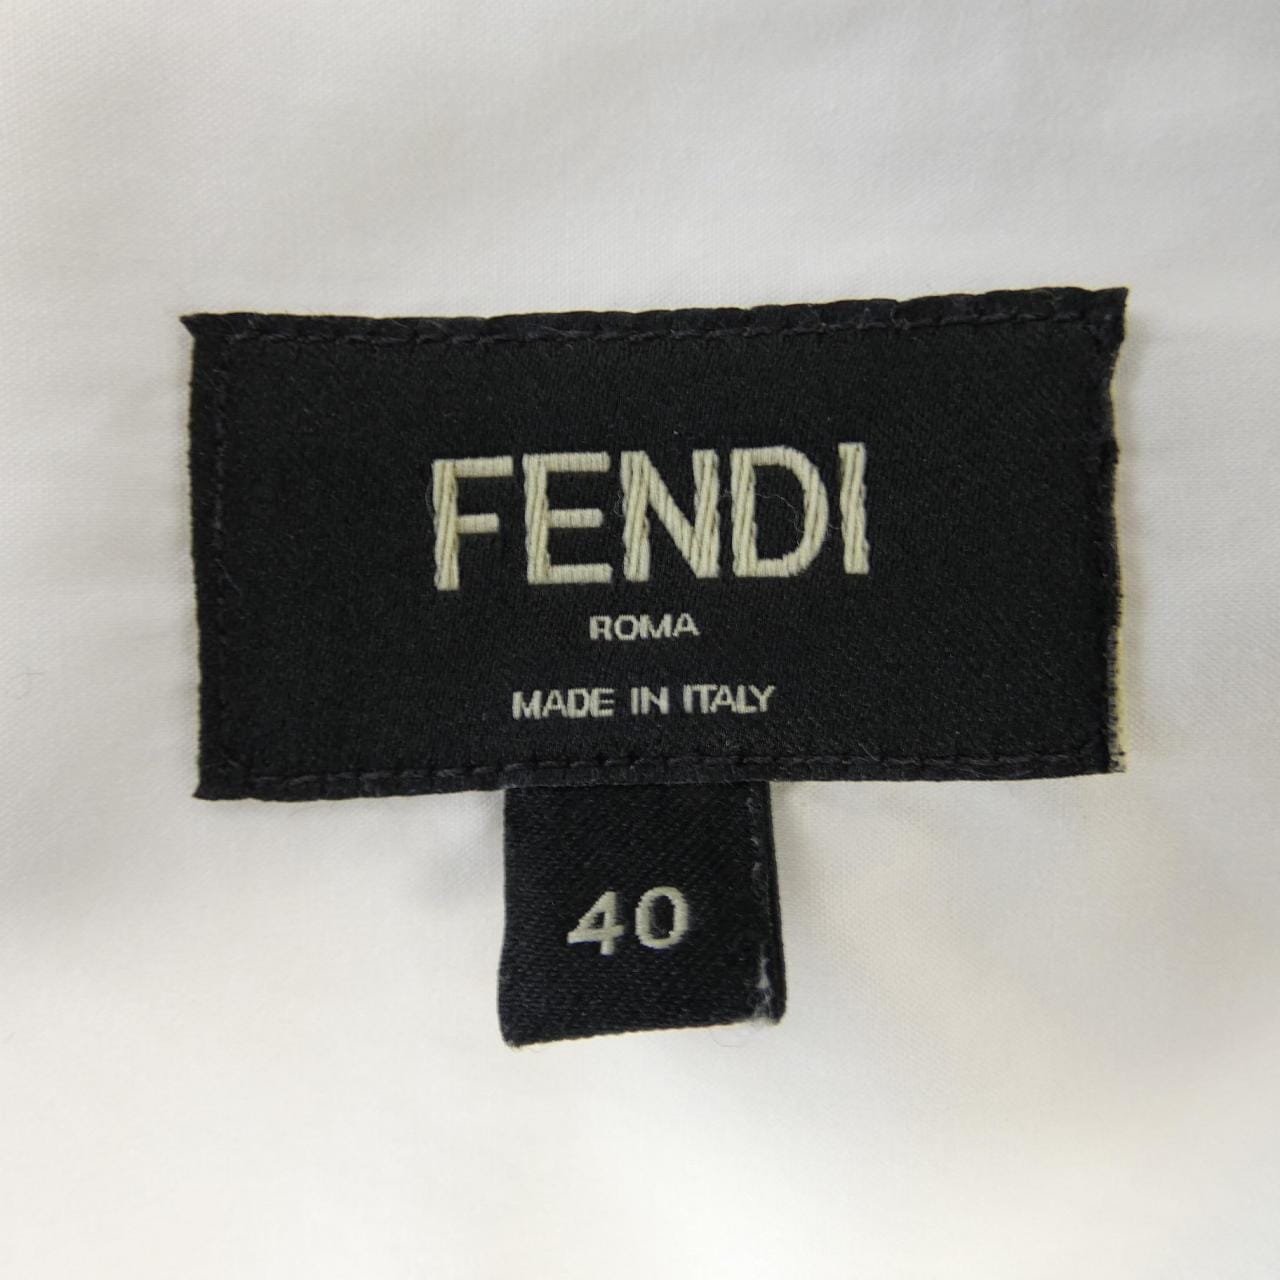 FENDI shirt